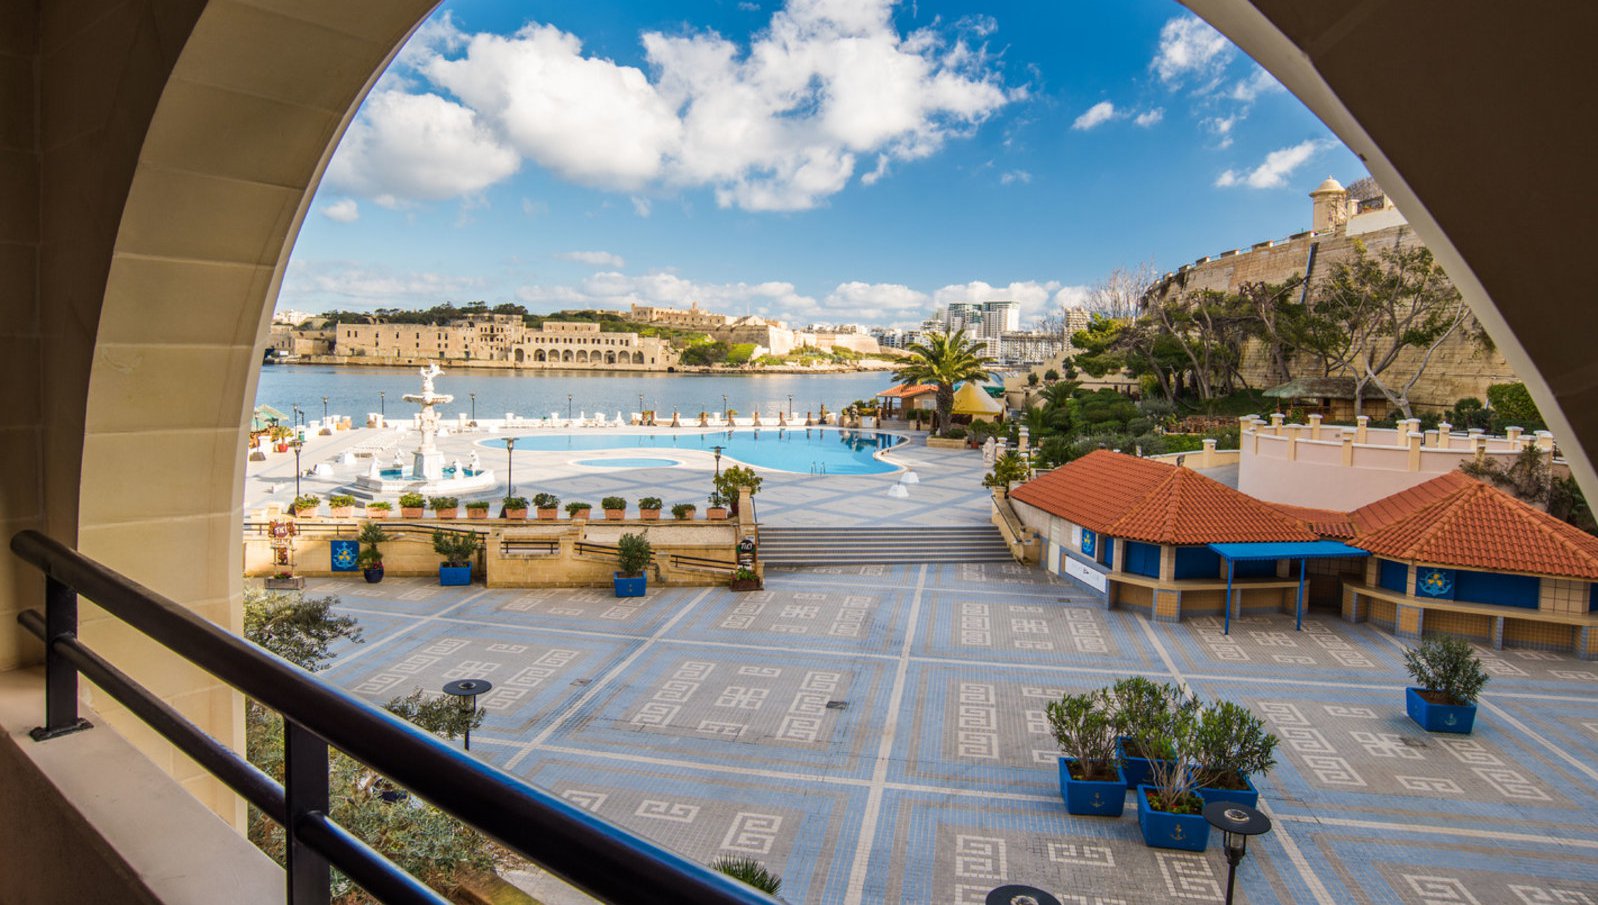 Inselglück im Mittelmeer im Herbst 2022 mit TUI - Grand Hotel Excelsior - Am Pool